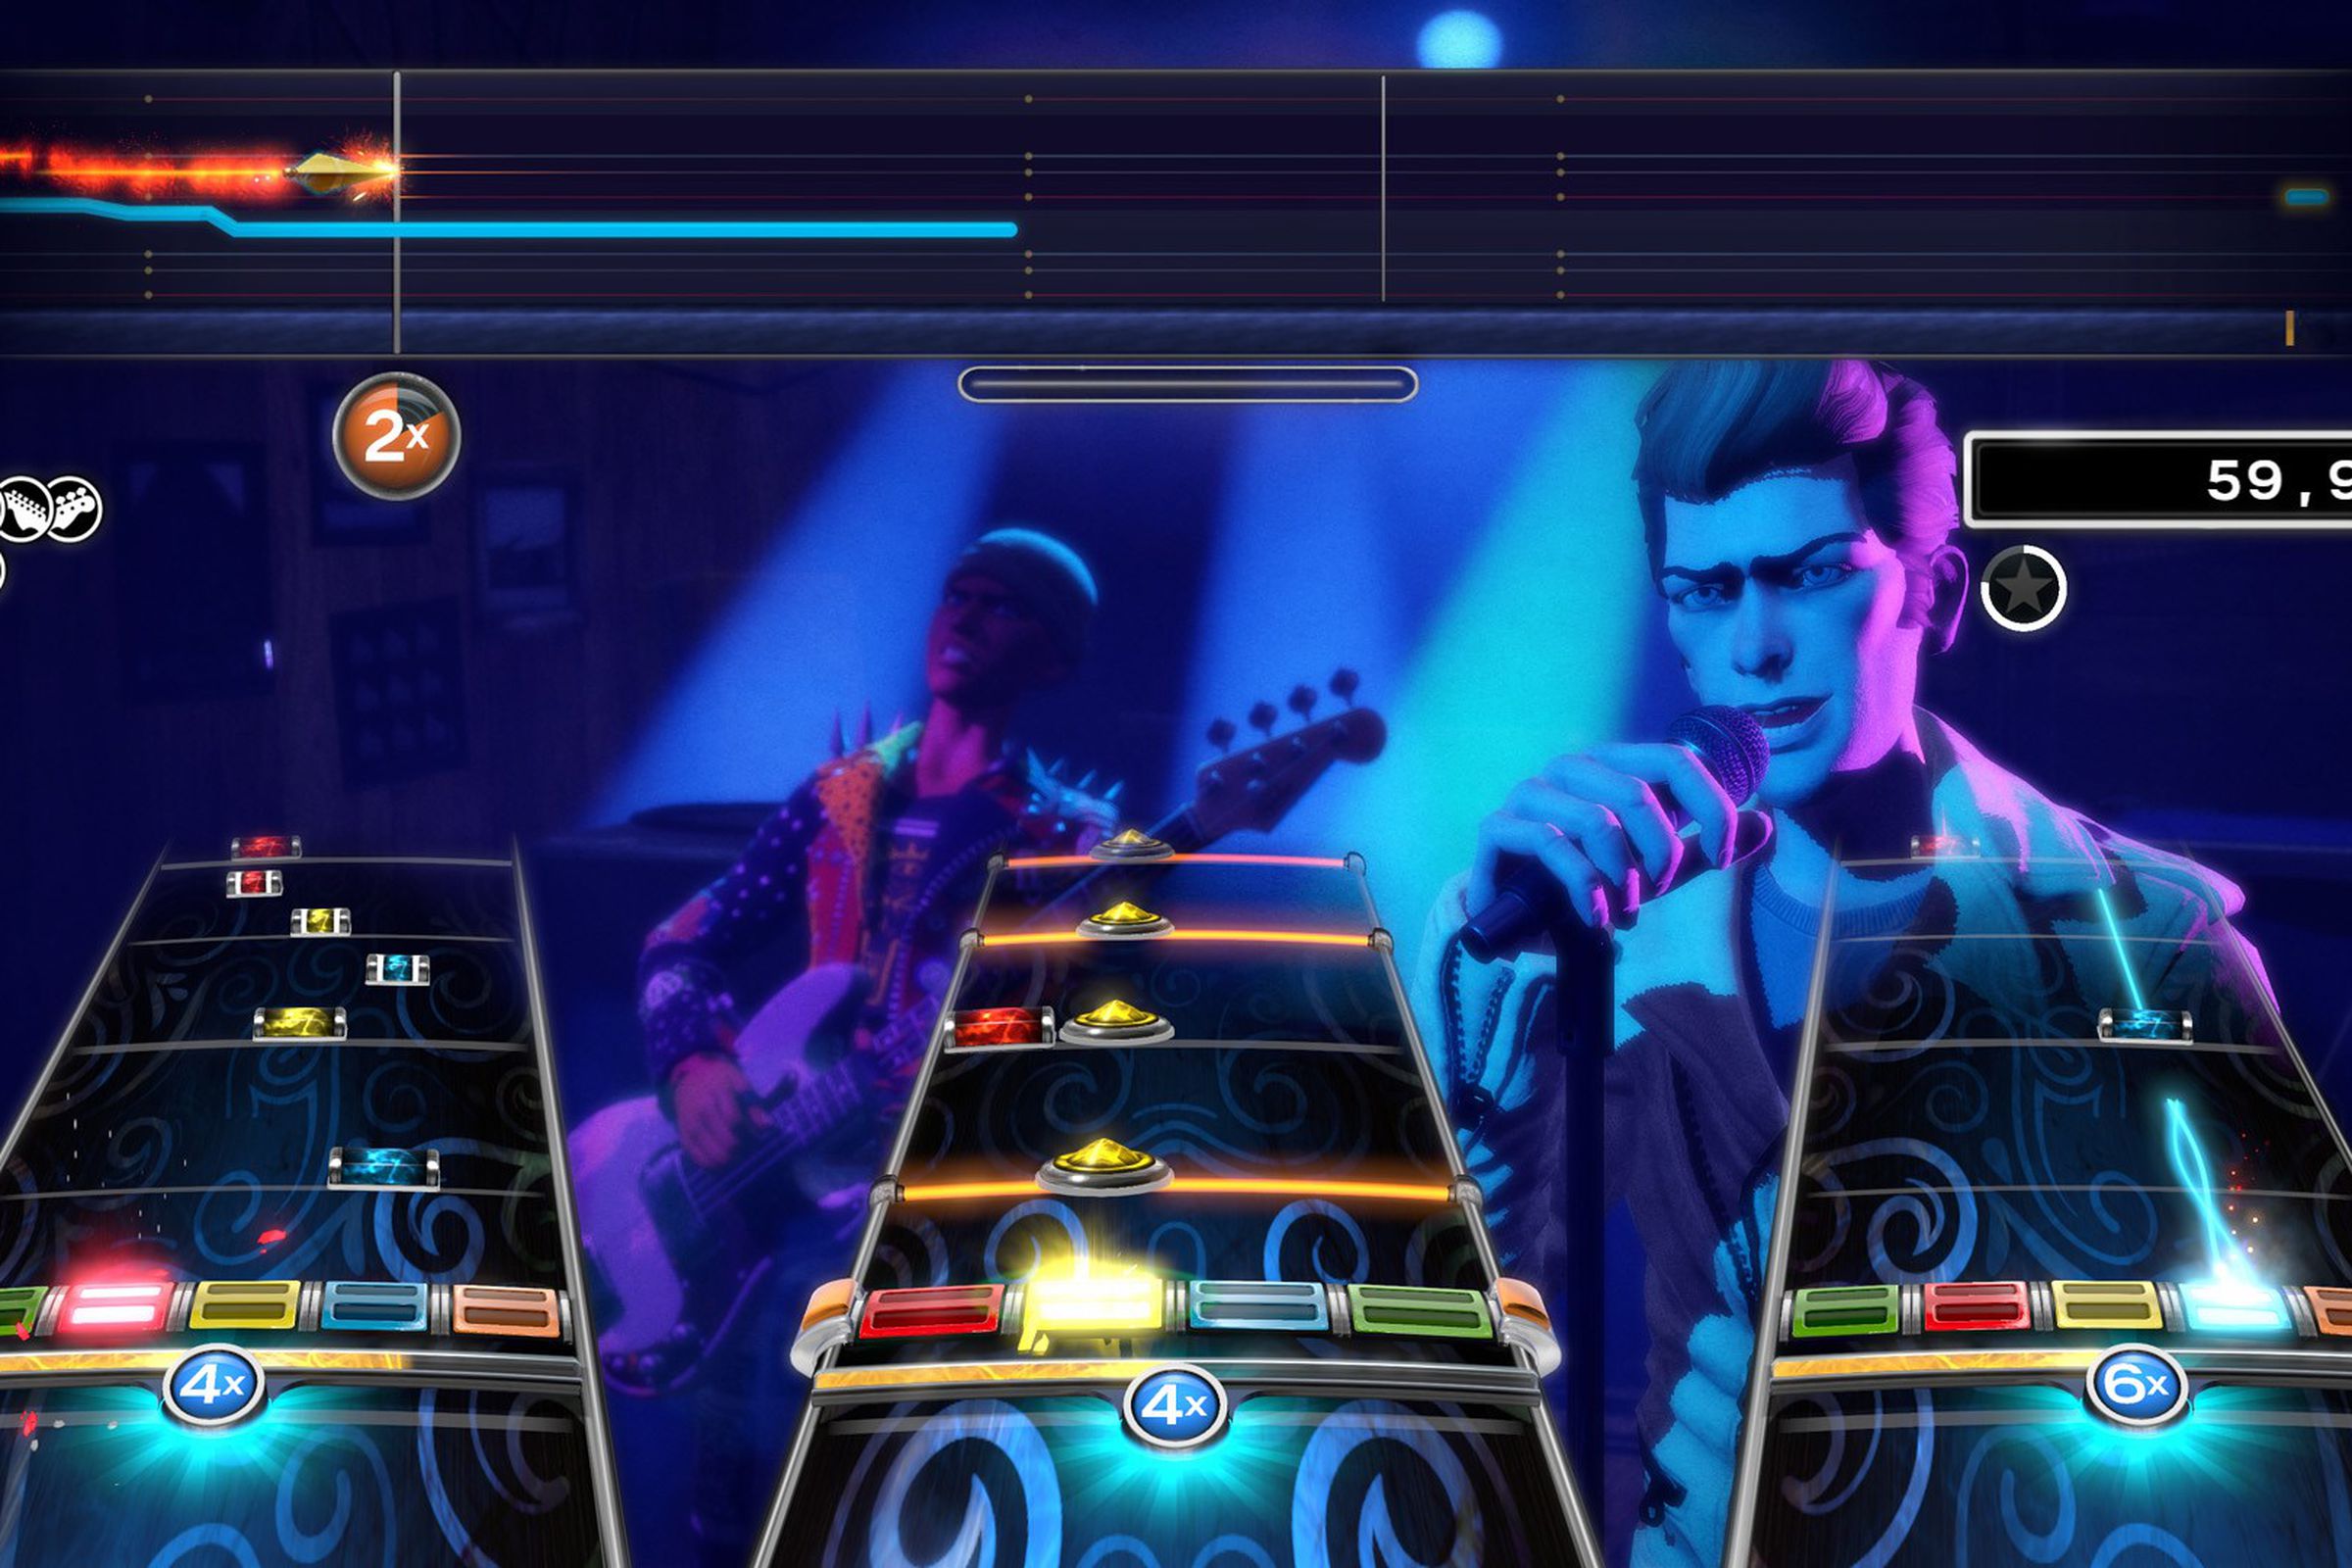 A screenshot from Rock Band 4.